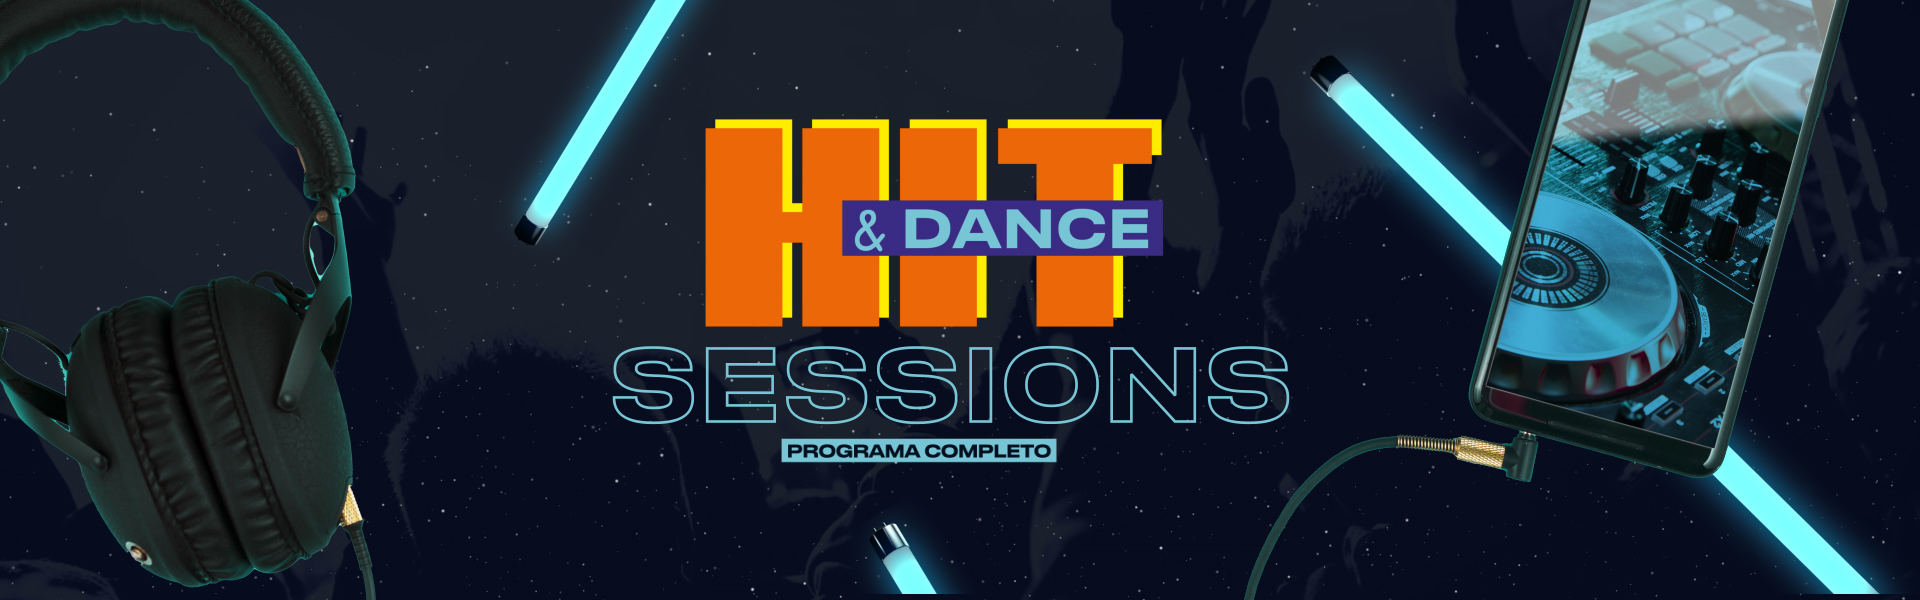 Negociar Conciencia Barcelona HIT and Dance Sessions (Programas Completos) – HIT FM